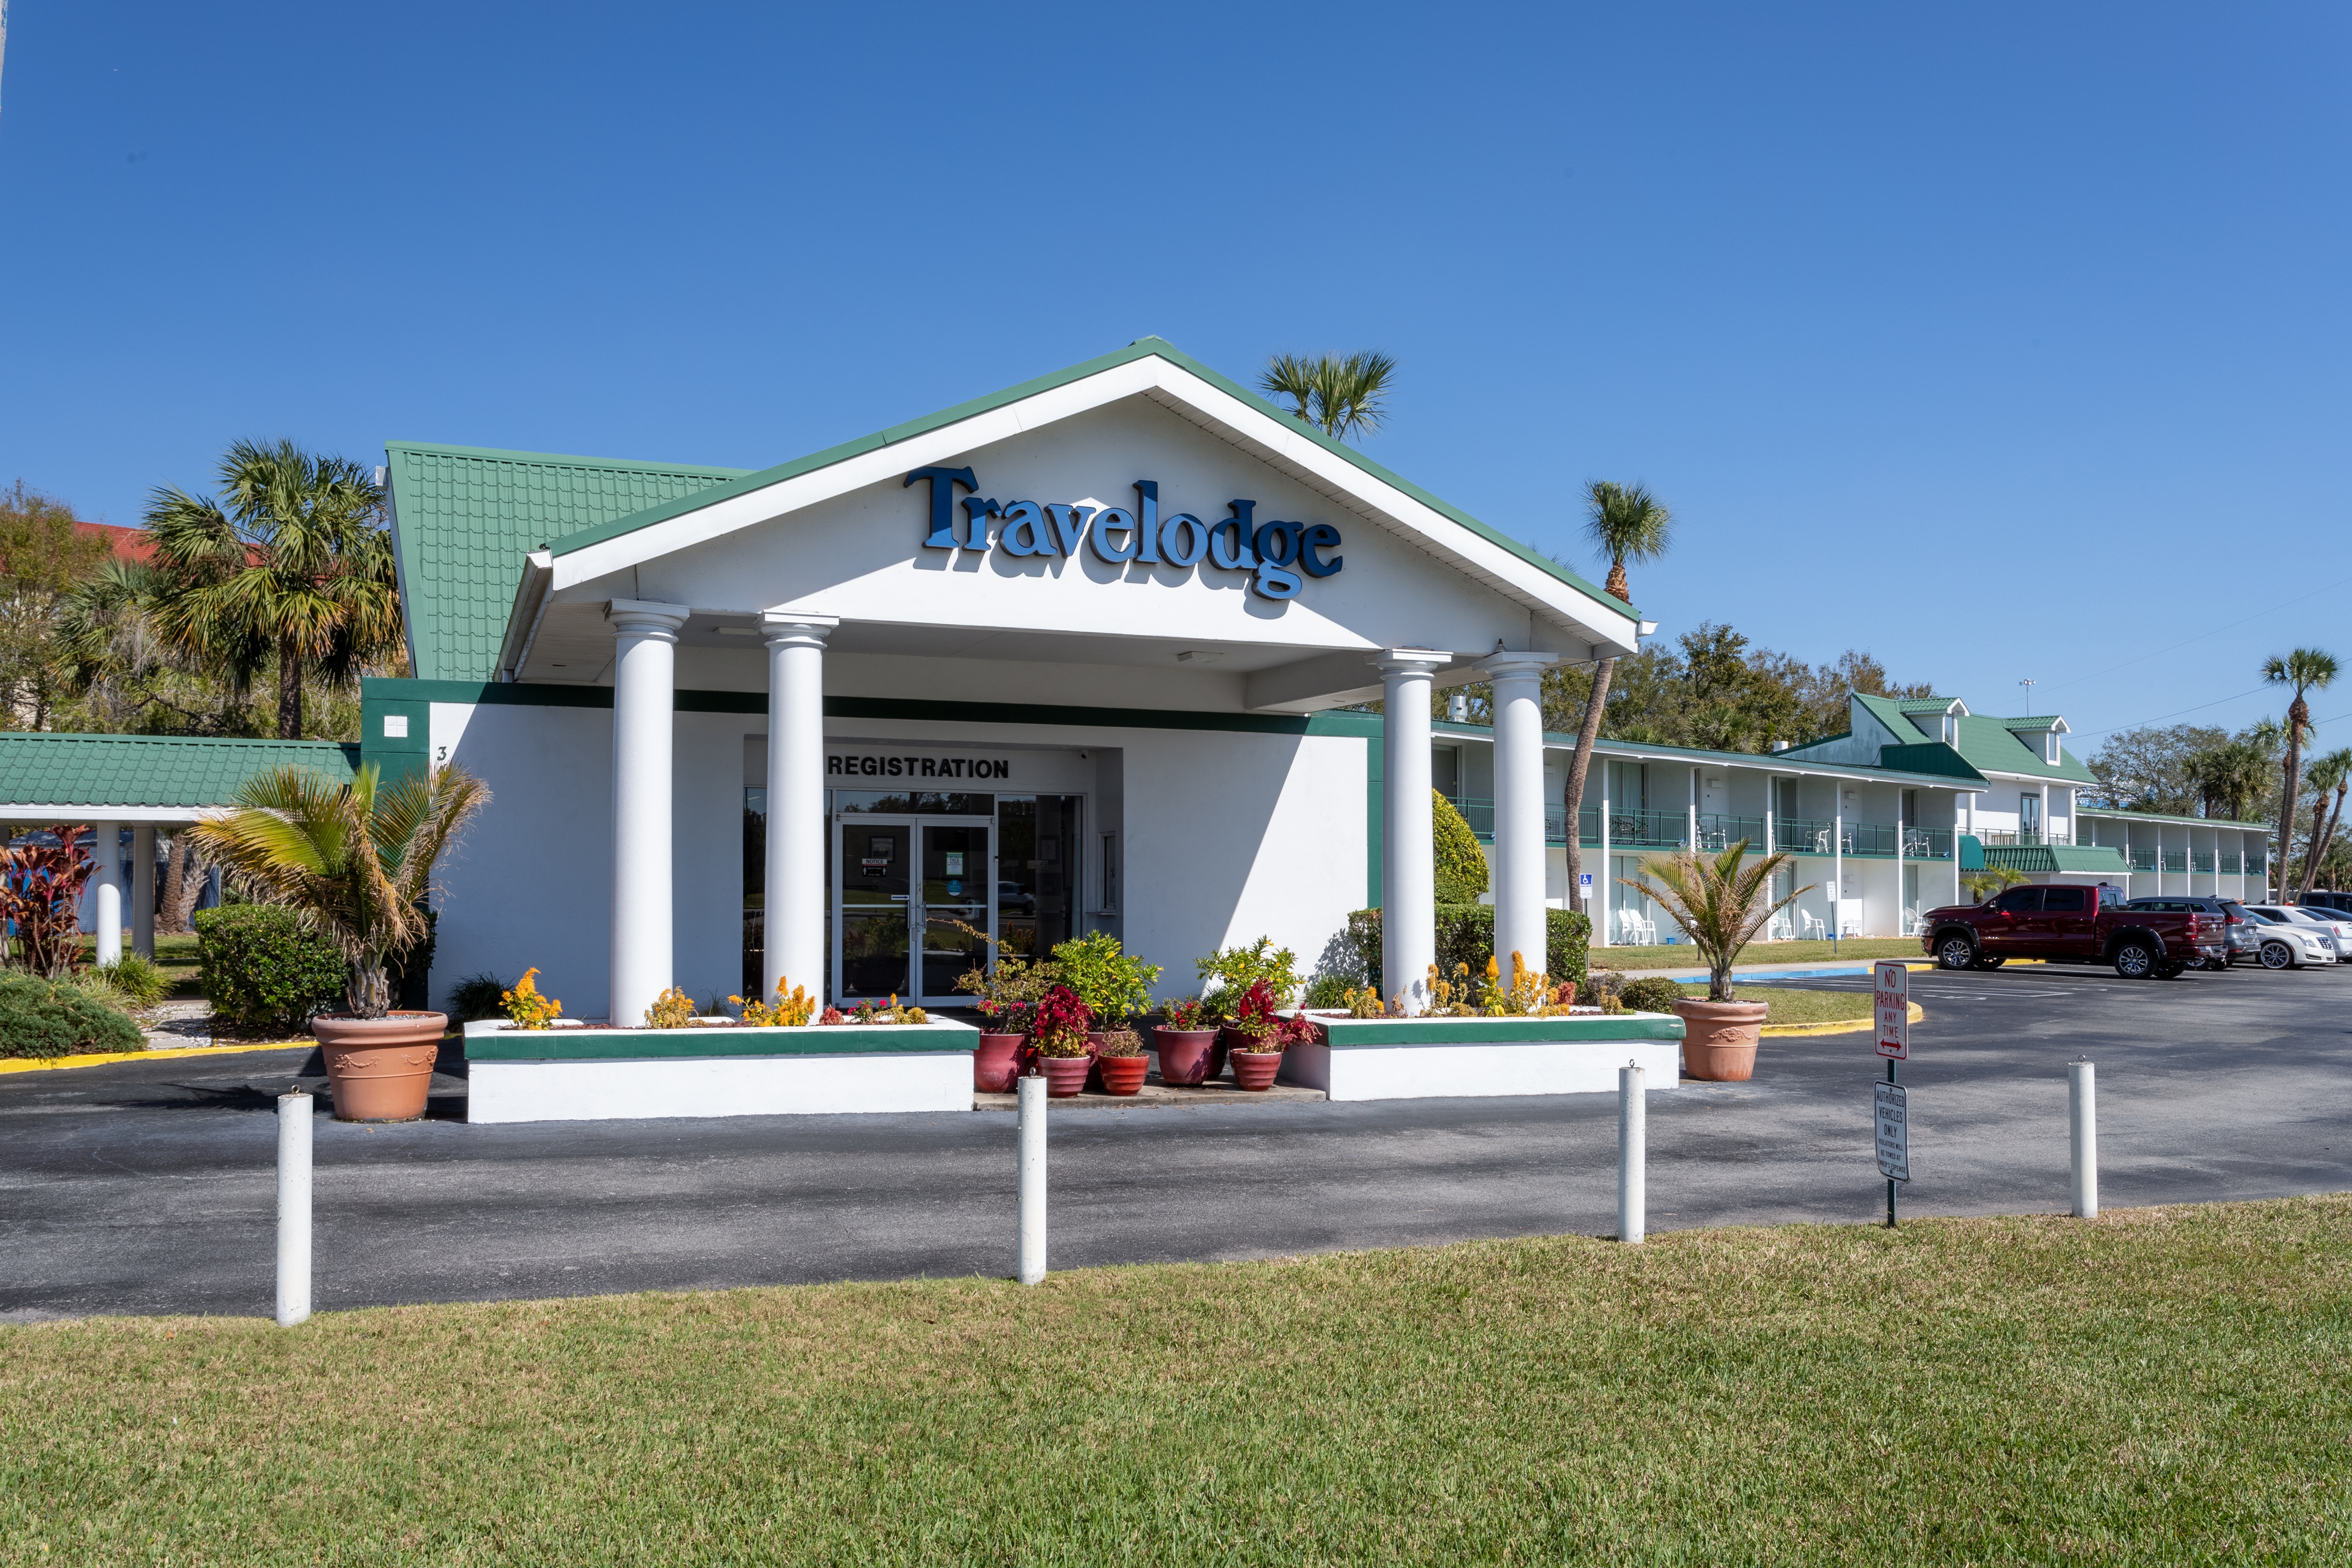 Exterior Day Image of Travelodge by Wyndham Lakeland hotel in Lakeland, Florida